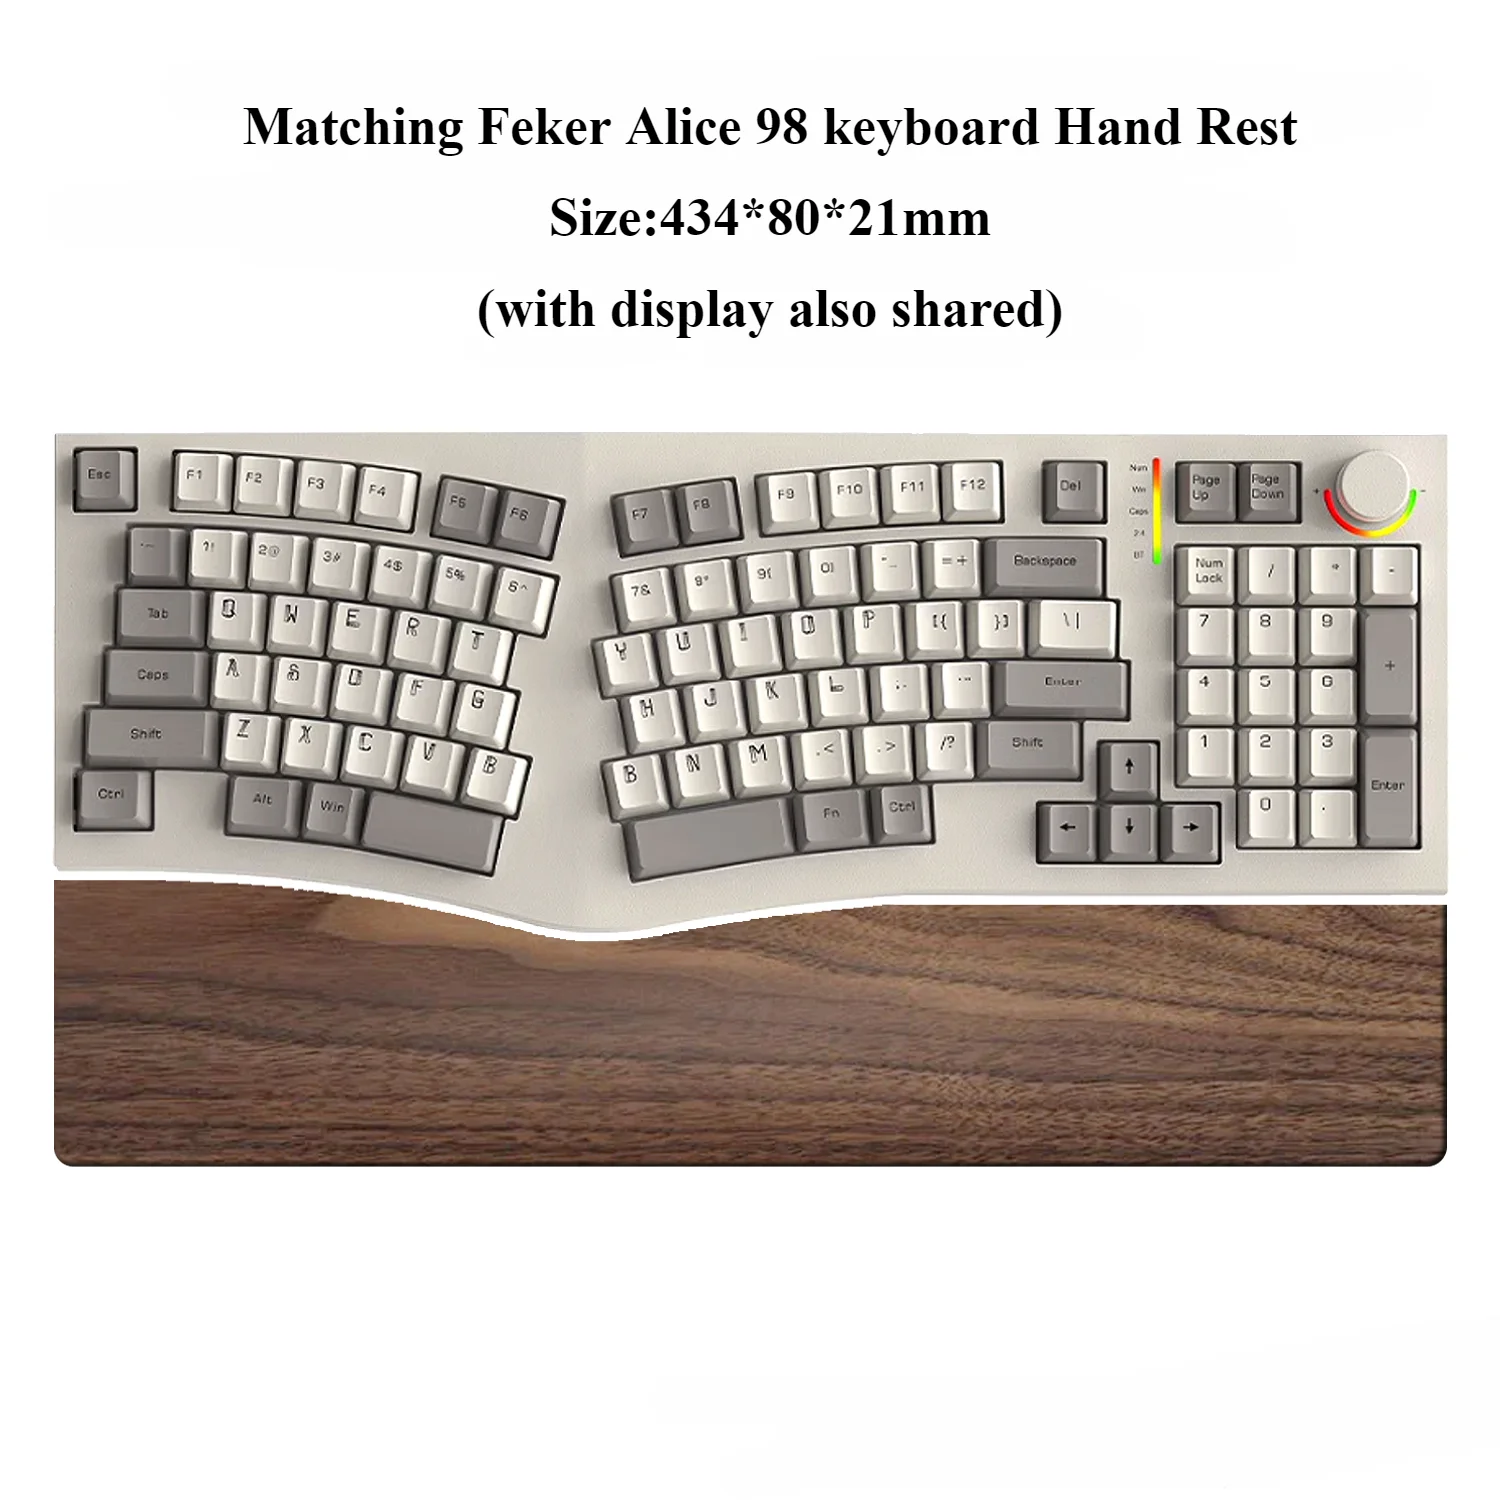 

MiFuny Customized Wodden Keyboard Hand Rest Wrist Rest Ergonomic Keyboard Pad Suitable for Feker Alice 98 Mechanical Keyboards